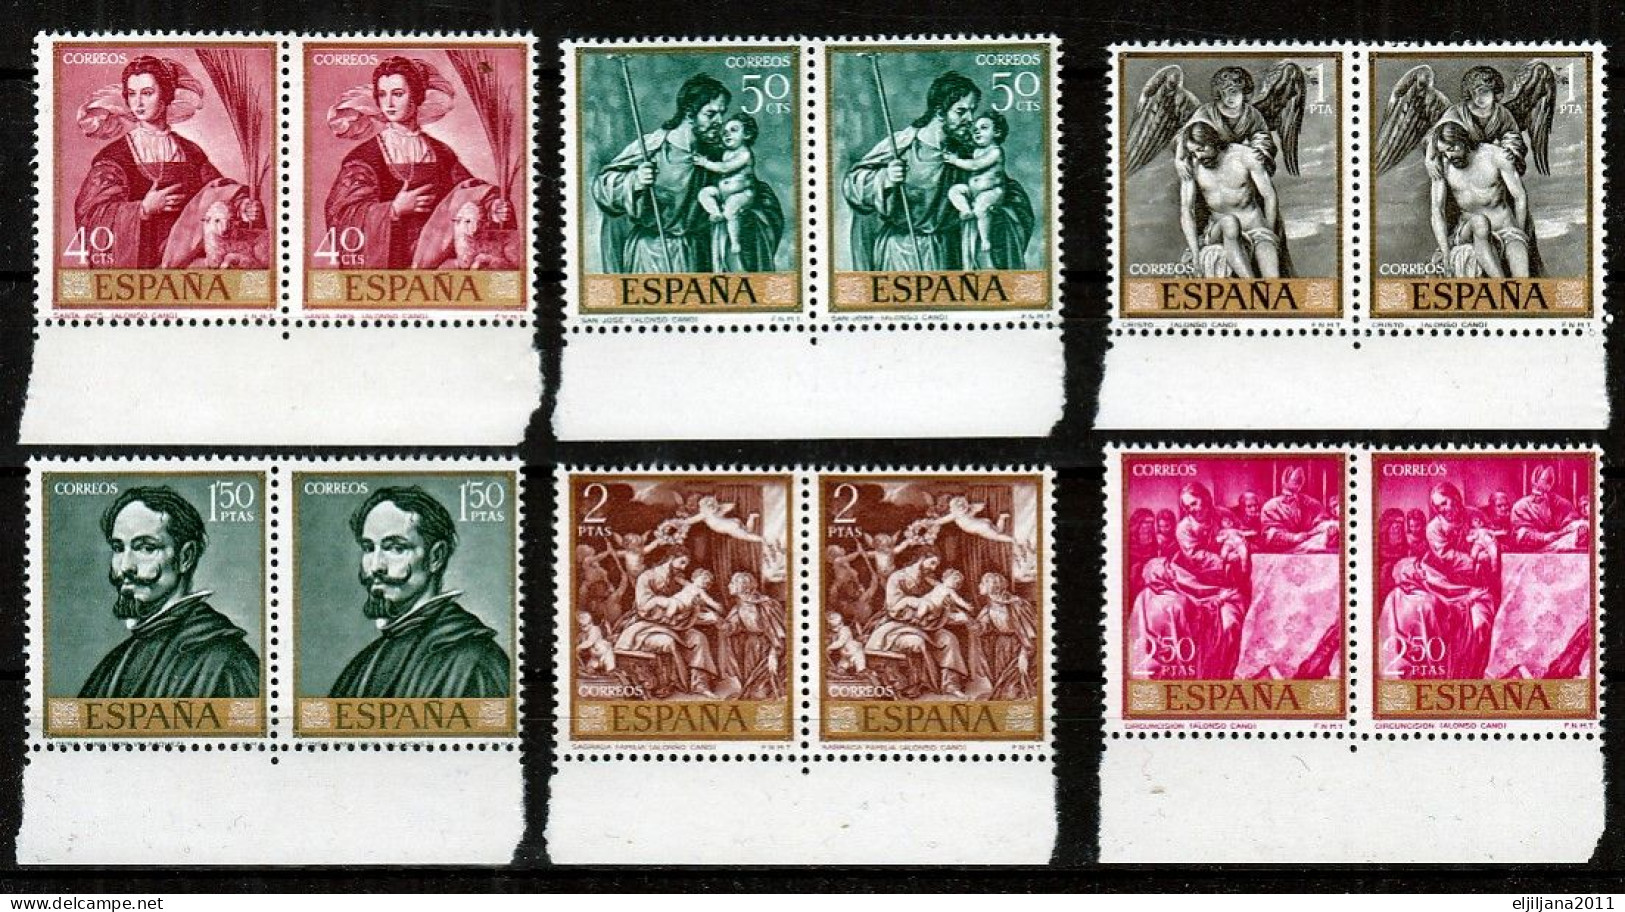 ⁕ SPAIN / ESPANA 1969 ⁕ Alonso Cano (stamp Day) Art Painting Gemalde Mi.1796-1805 X2 ⁕ MNH - Nuovi